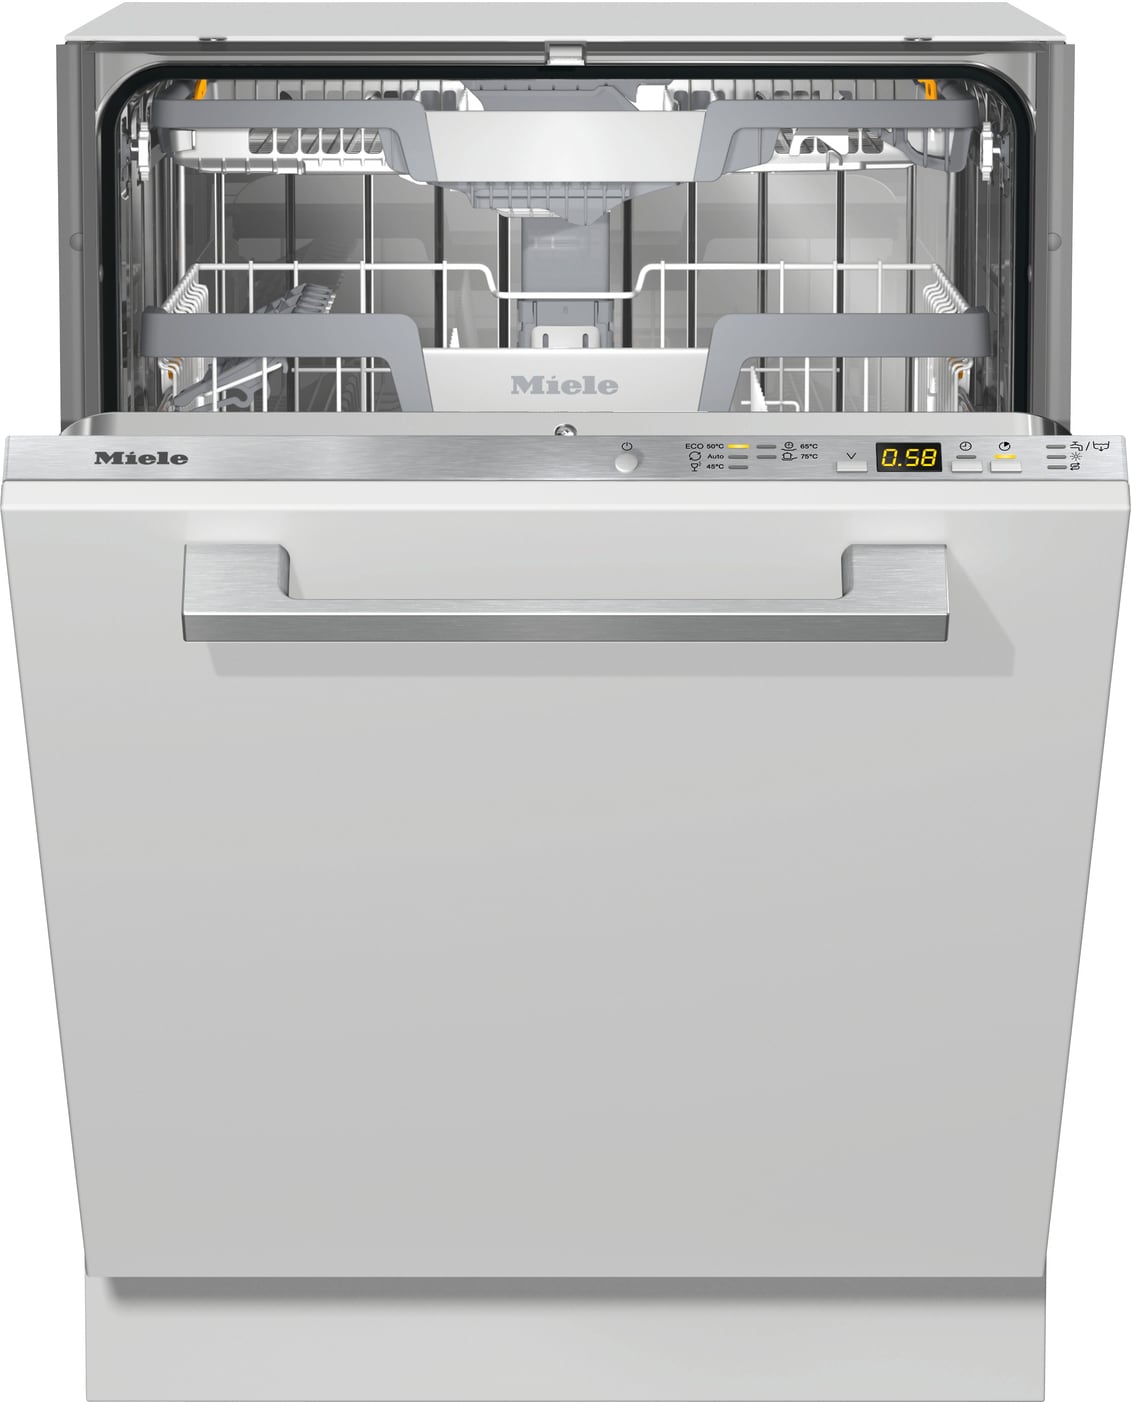 Miele opvaskemaskine G5288SCVIXXL Integreret | Elgiganten